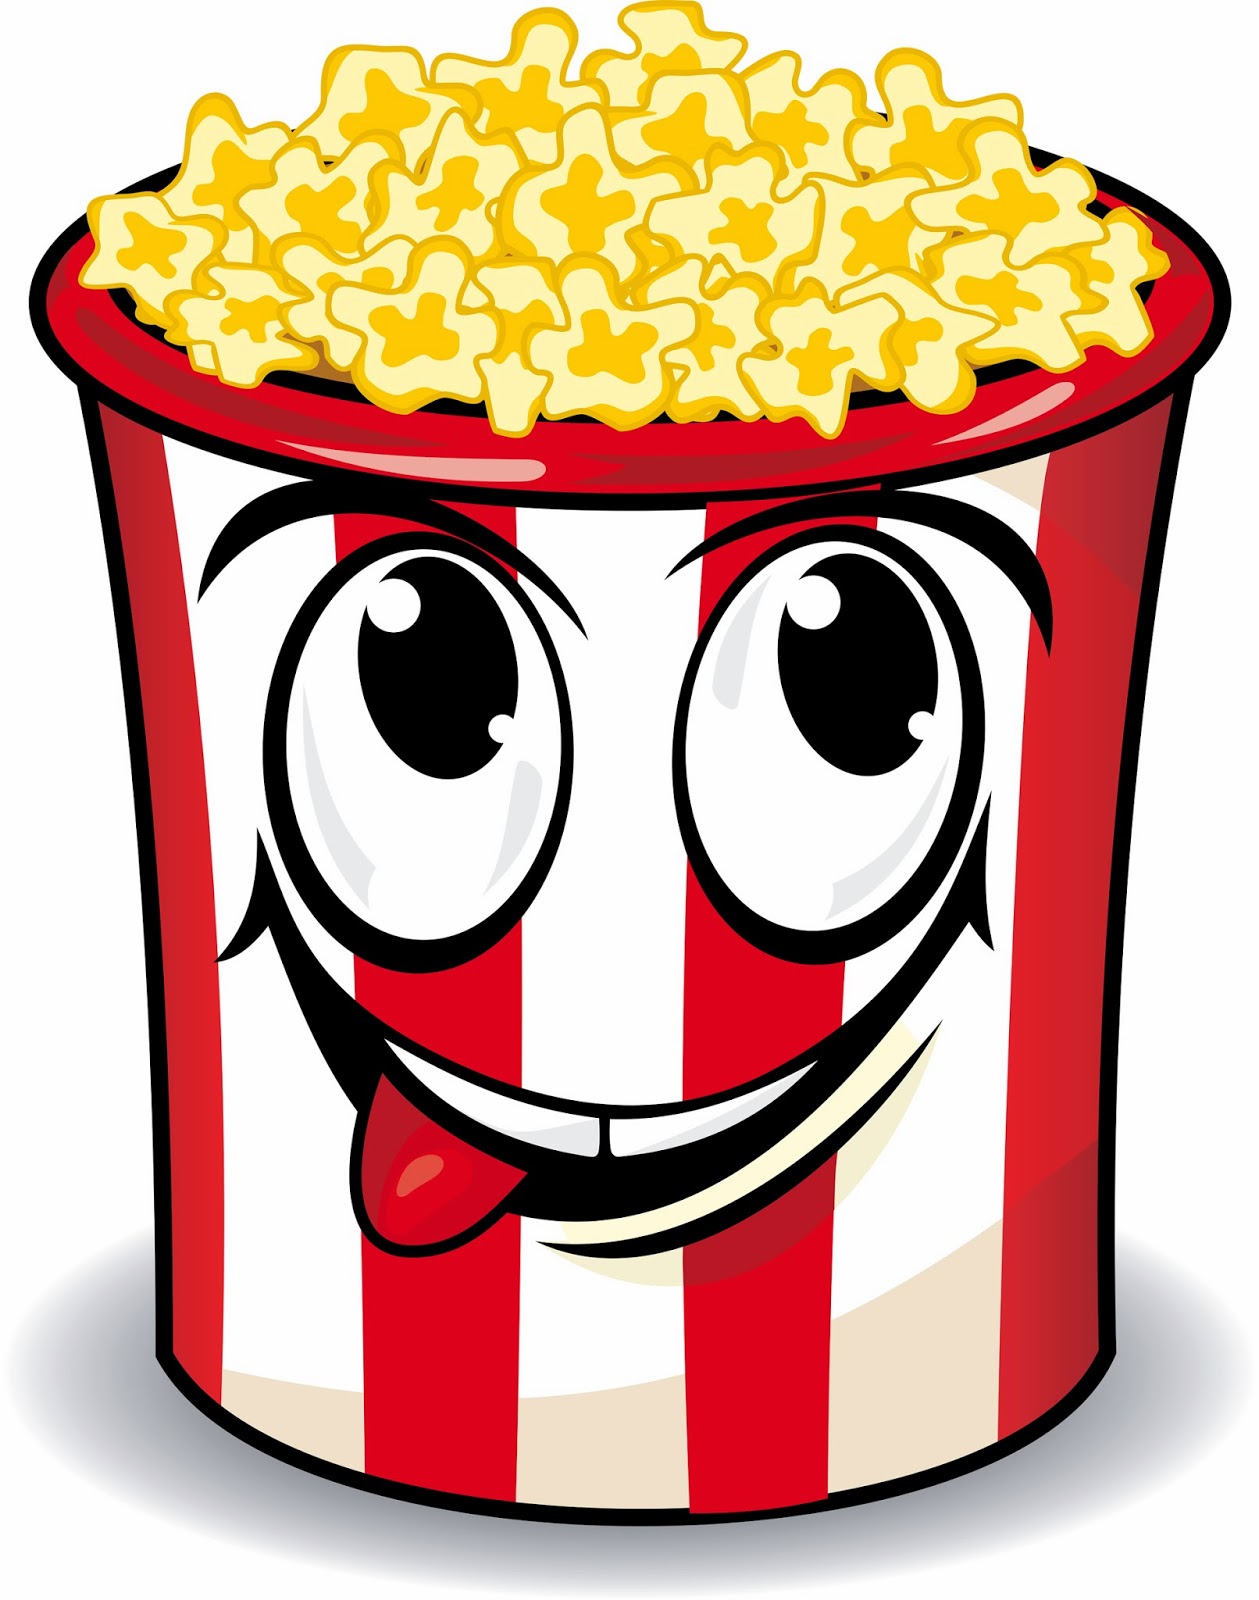 Free cliparts download clip. Movie clipart bowl popcorn